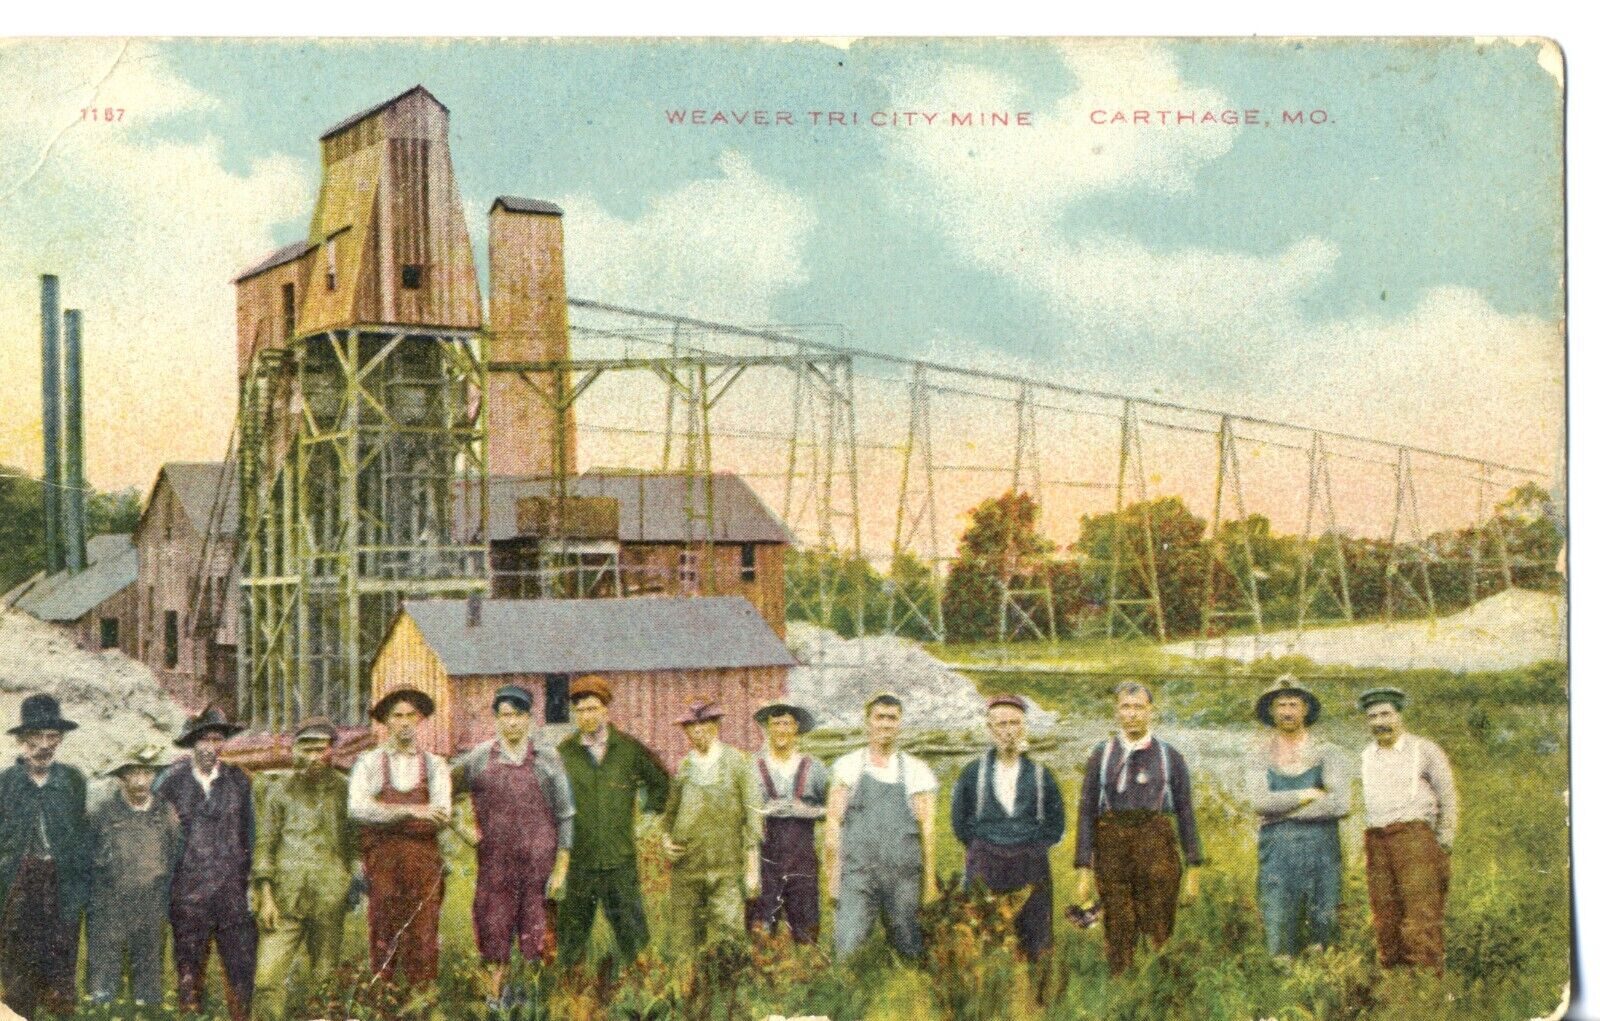 Weaver Tri-City Mine, Carthage, Mo. Missouri Mining Postcard #1187